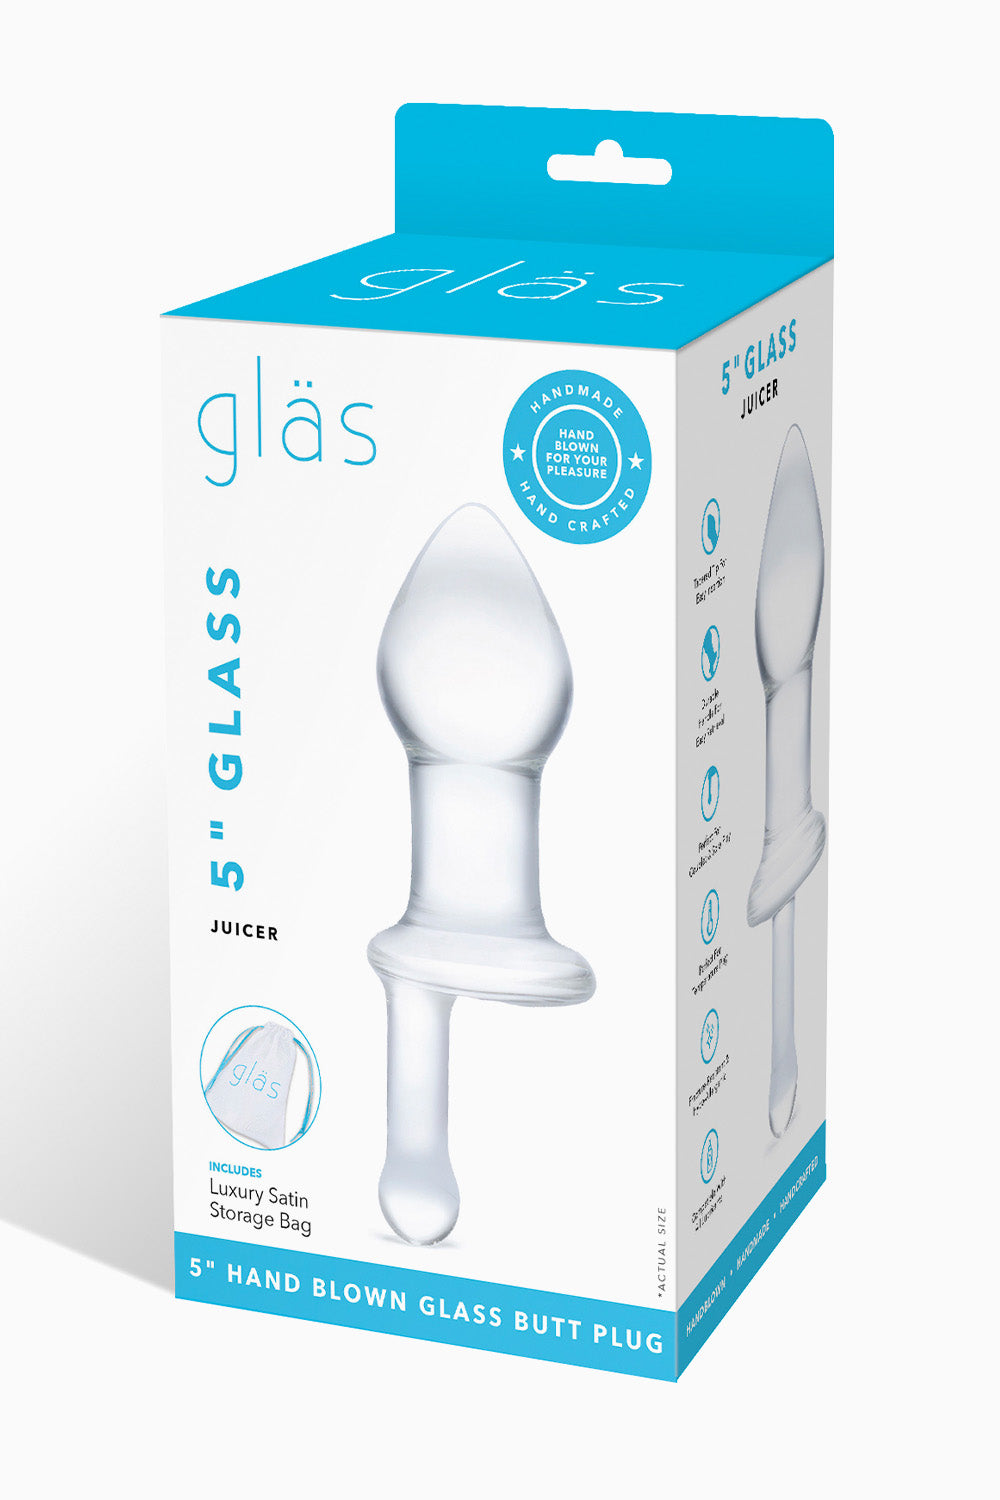 Glas Glass Juicer Butt Plug 5 Inch